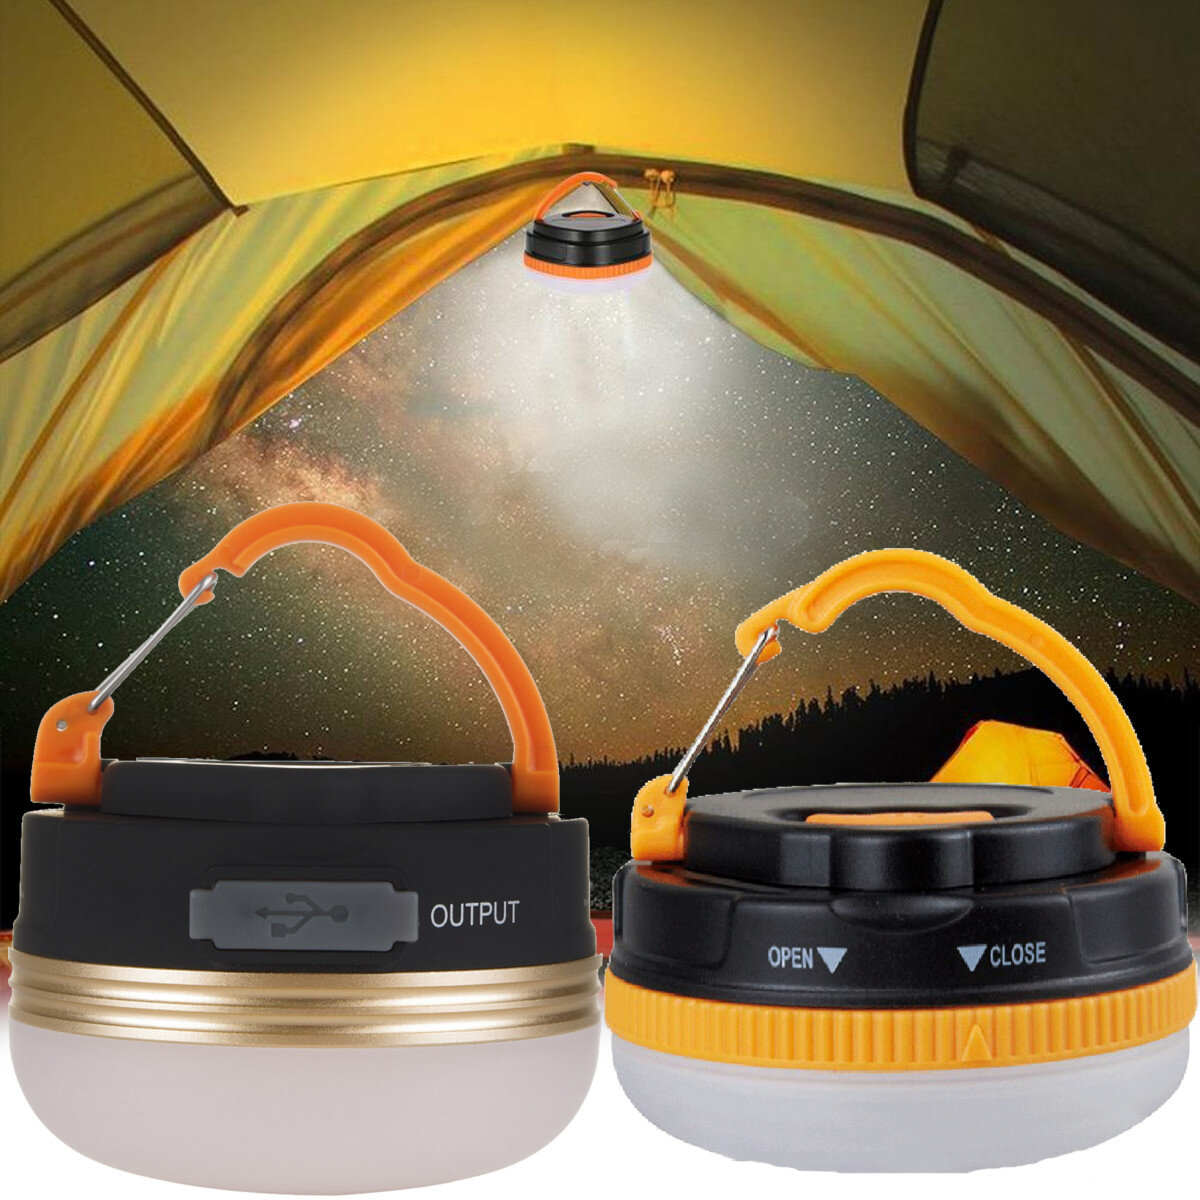 Luz de camping 3W recargable por USB, lámpara de tienda portátil al aire libre, linterna LED de emergencia